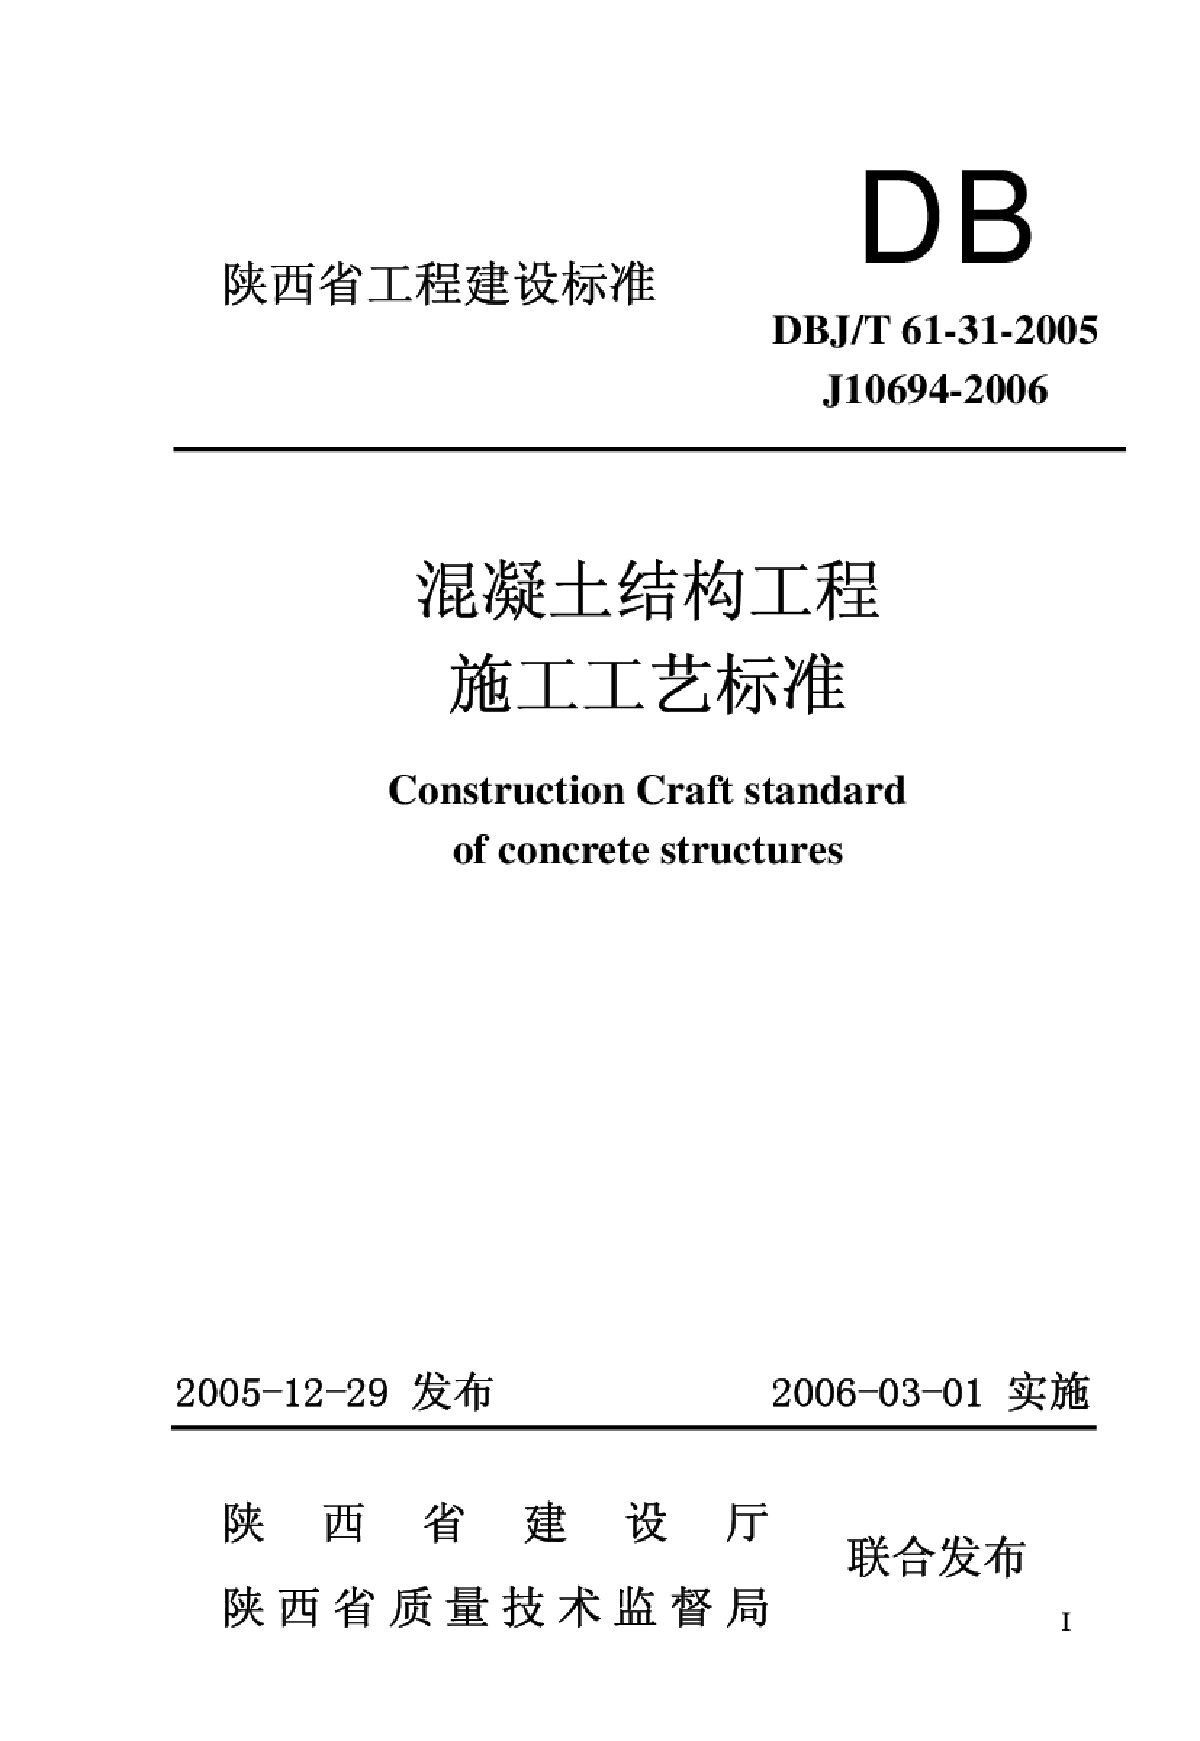 DBJT 61-31-2005 混凝土结构工程施工工艺标准